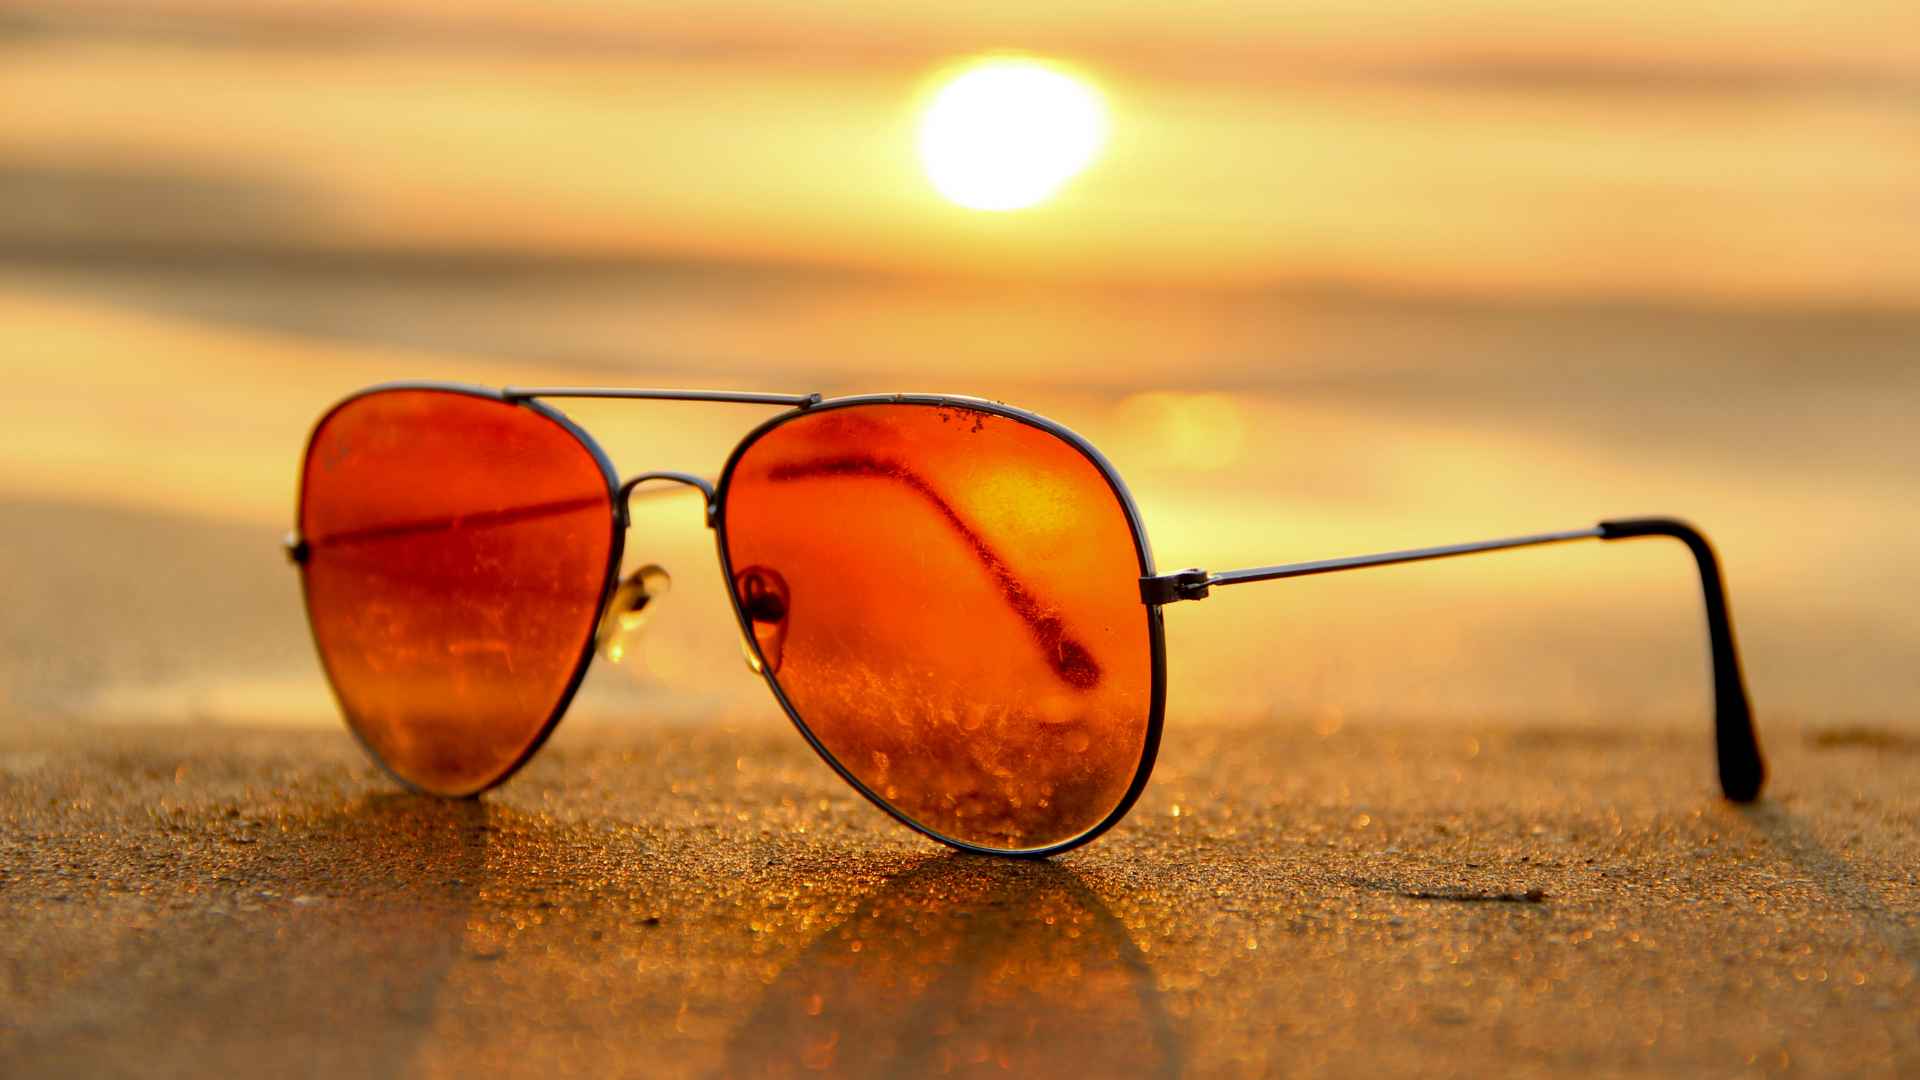 Sunglasses reduce the UV damage of the sun.